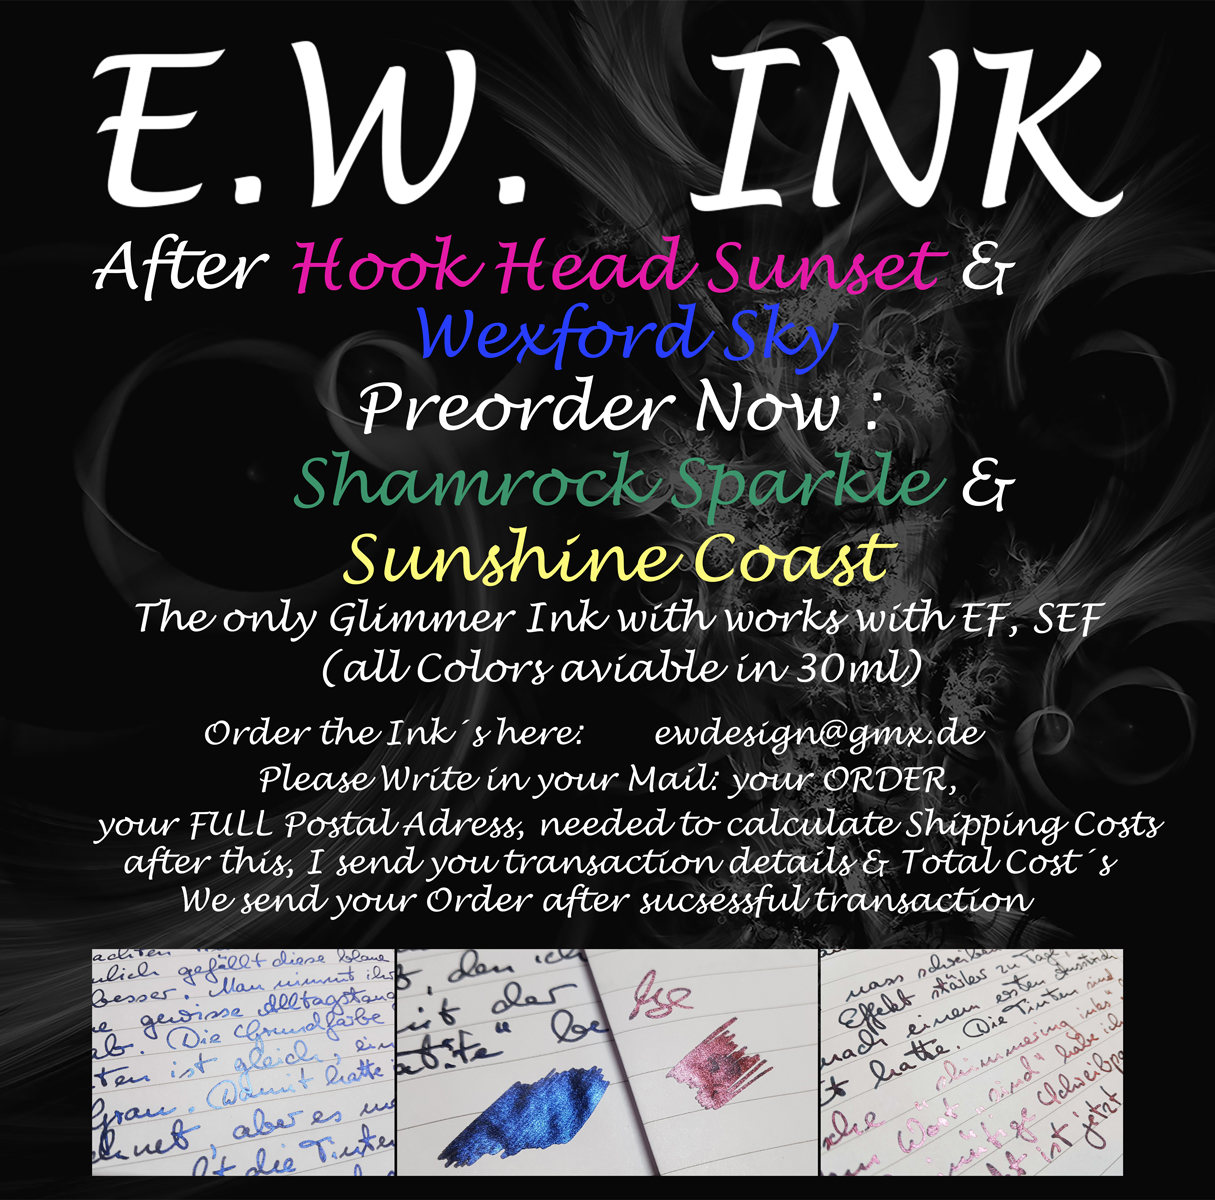 EW-INK-2019-WS-HHS-&-ORDER-DETAILS.jpg